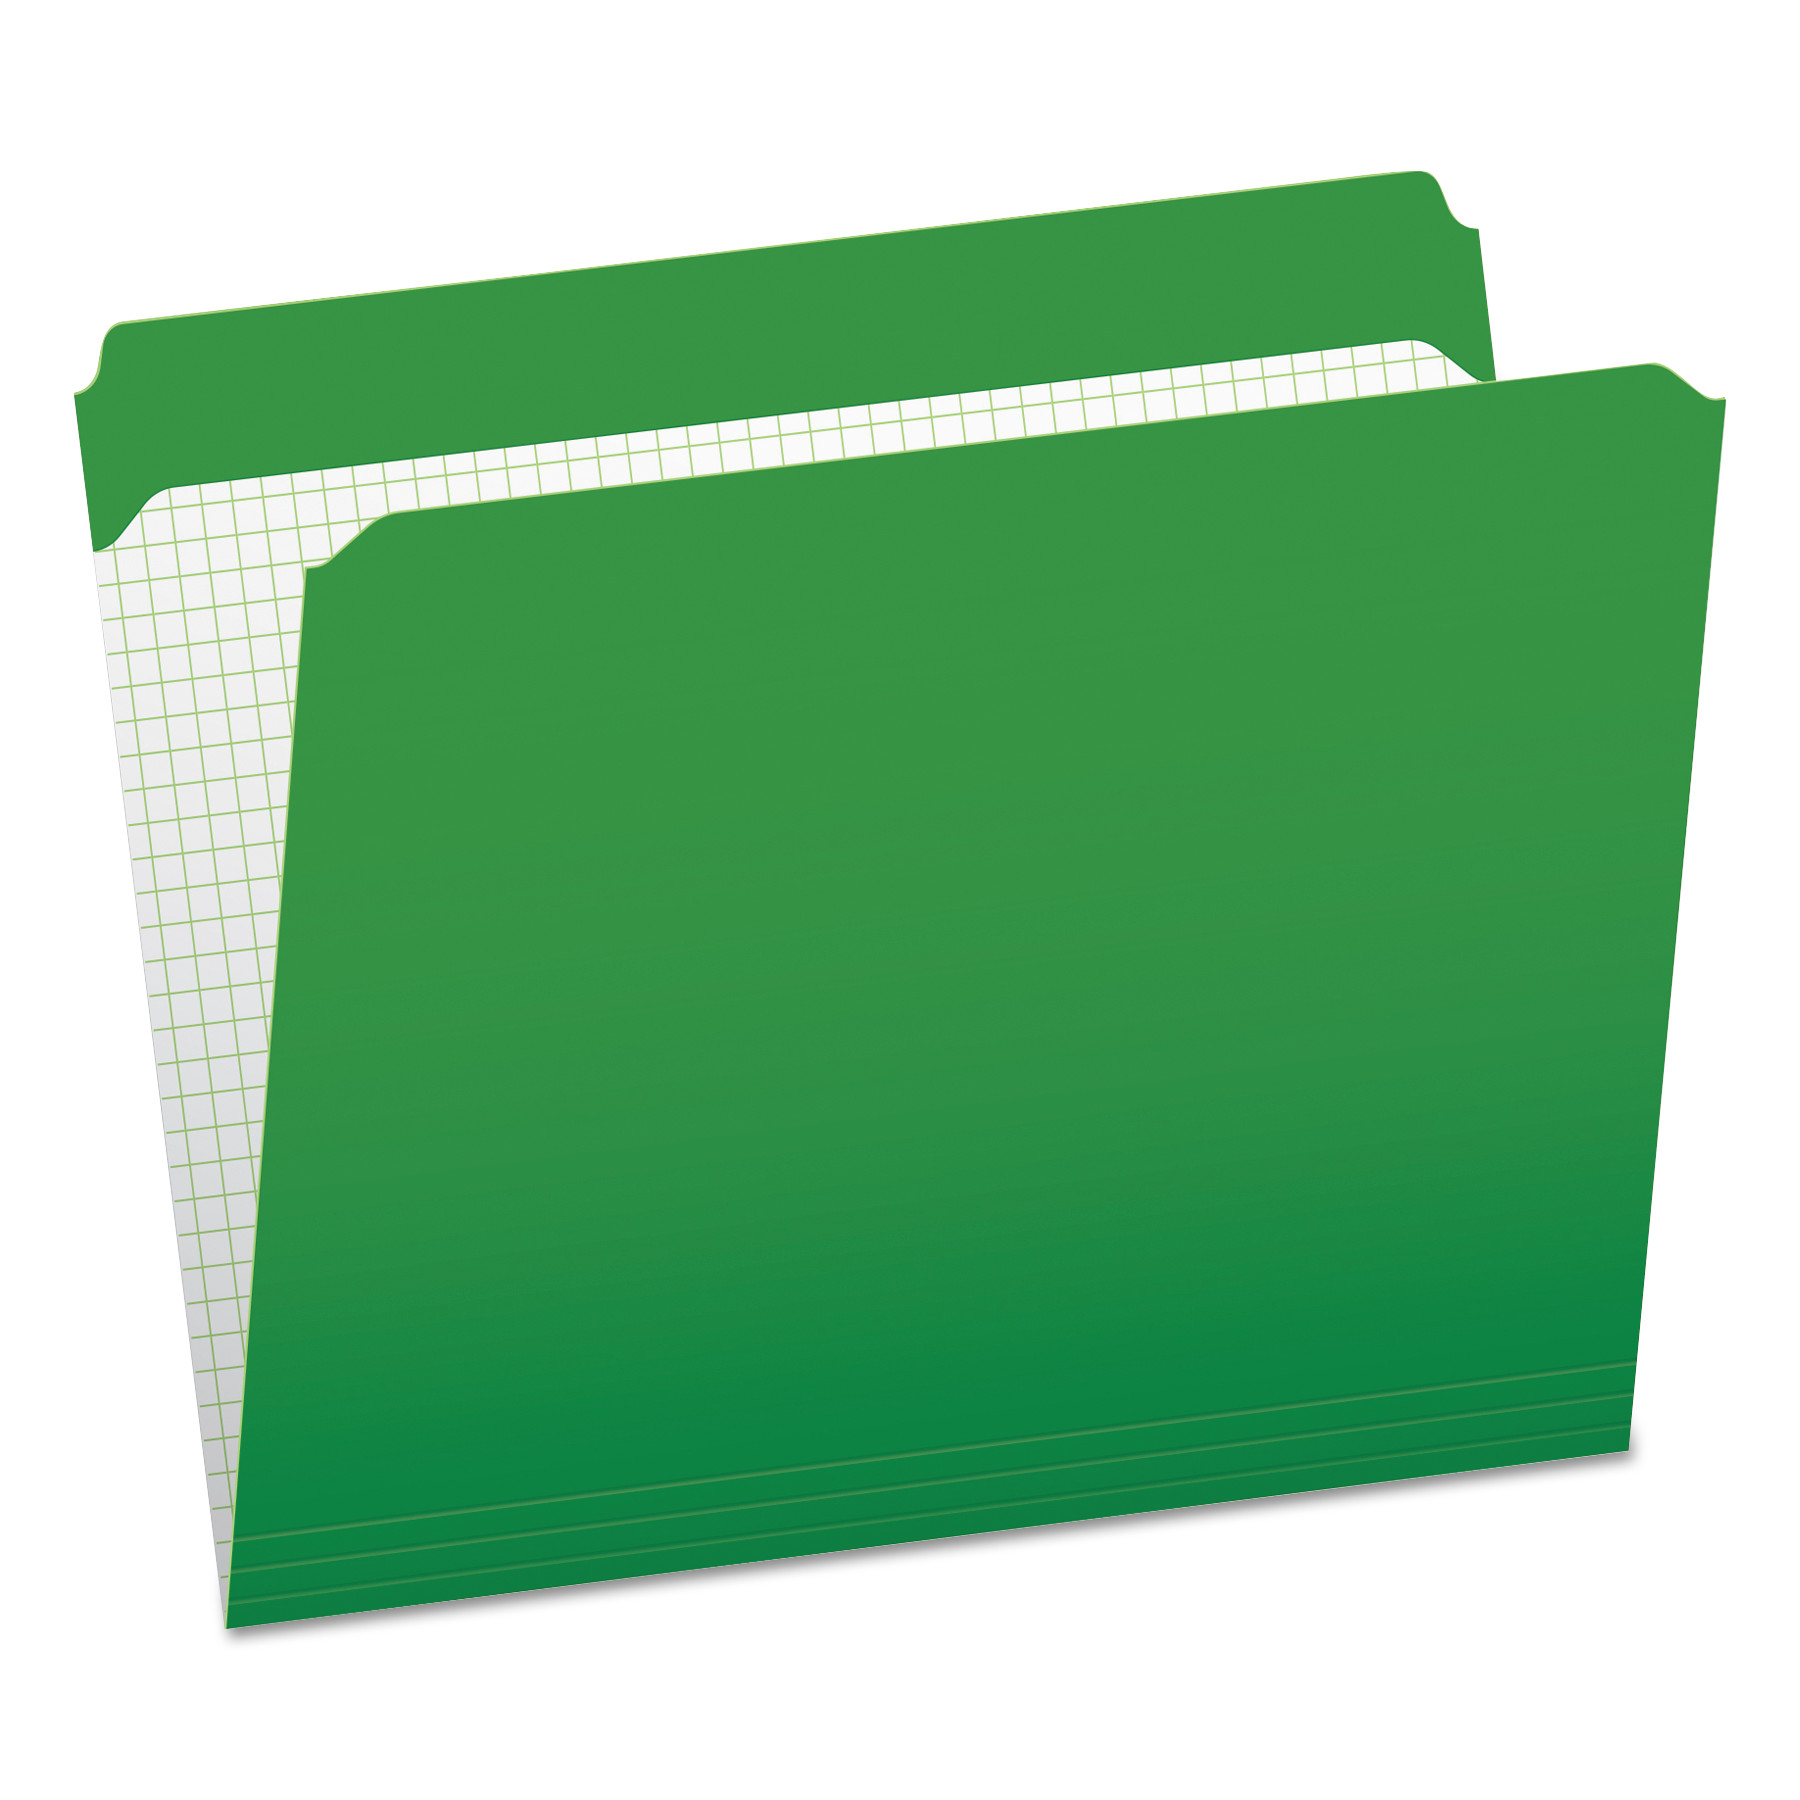  Pendaflex R152 BGR Double-Ply Reinforced Top Tab Colored File Folders, Straight Tab, Letter Size, Bright Green, 100/Box (PFXR152BGR) 